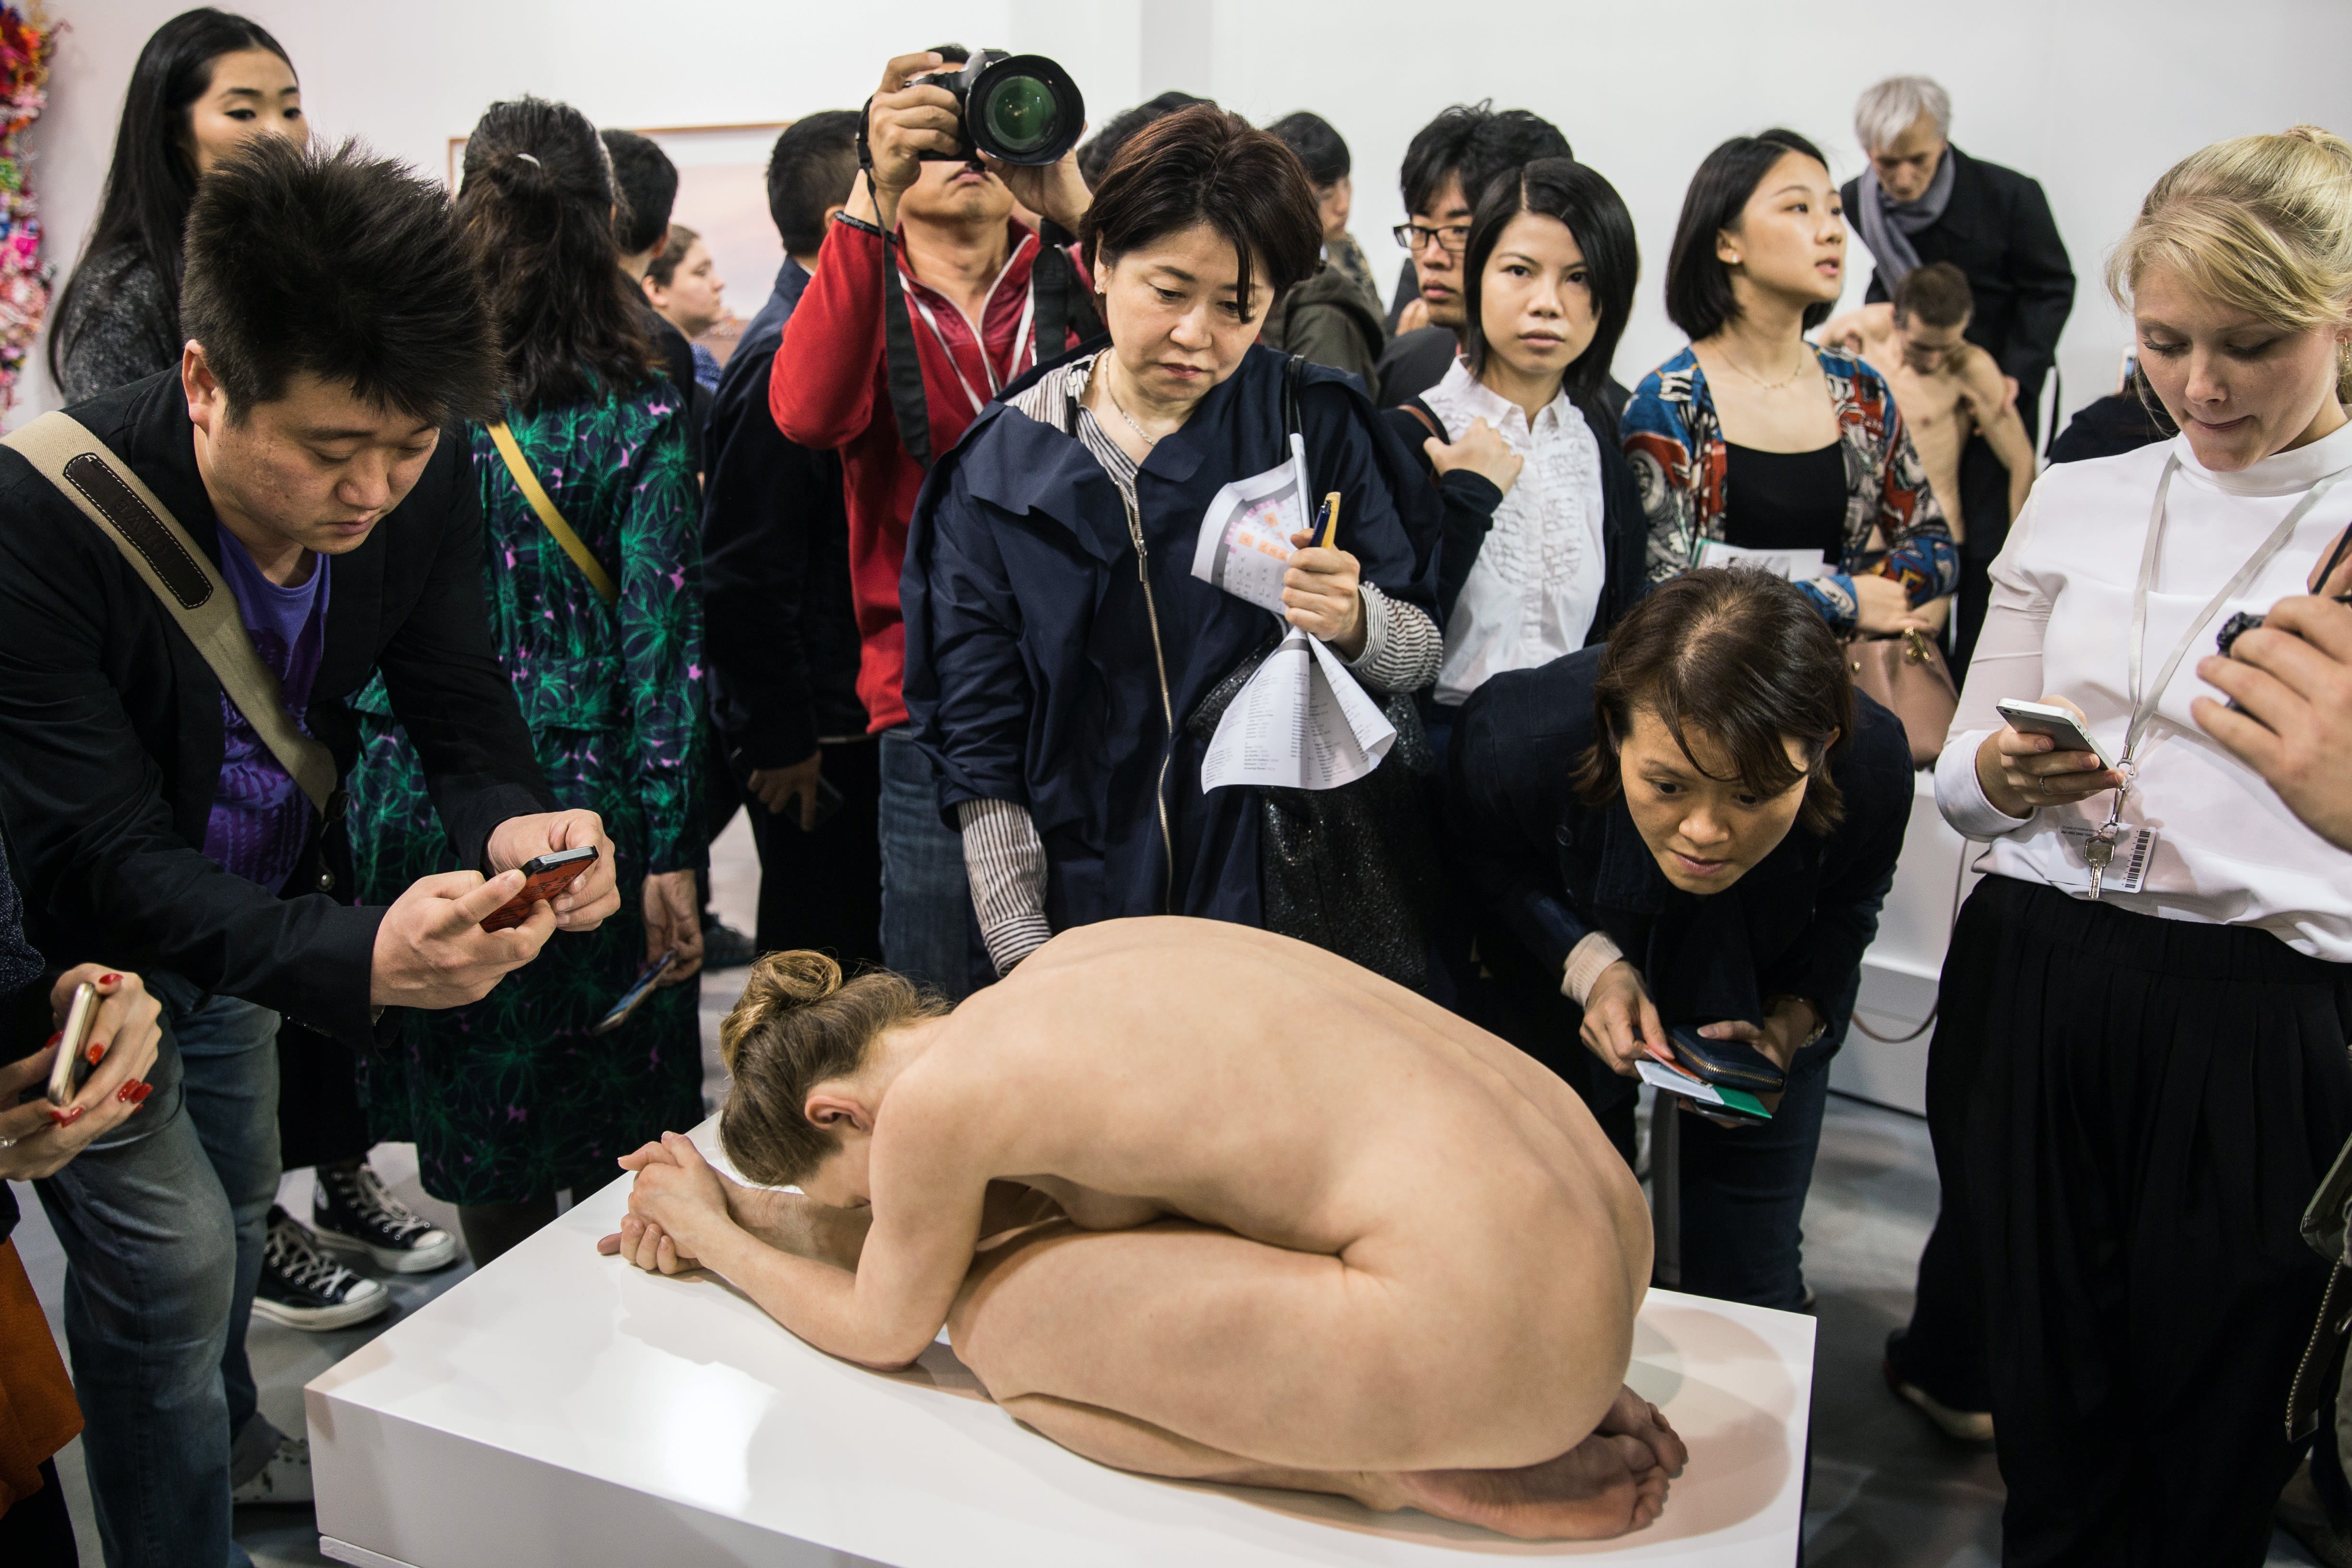 Naked Girl Art Nude - Art Basel Hong Kong's eerily realistic nude sculpture | CNN